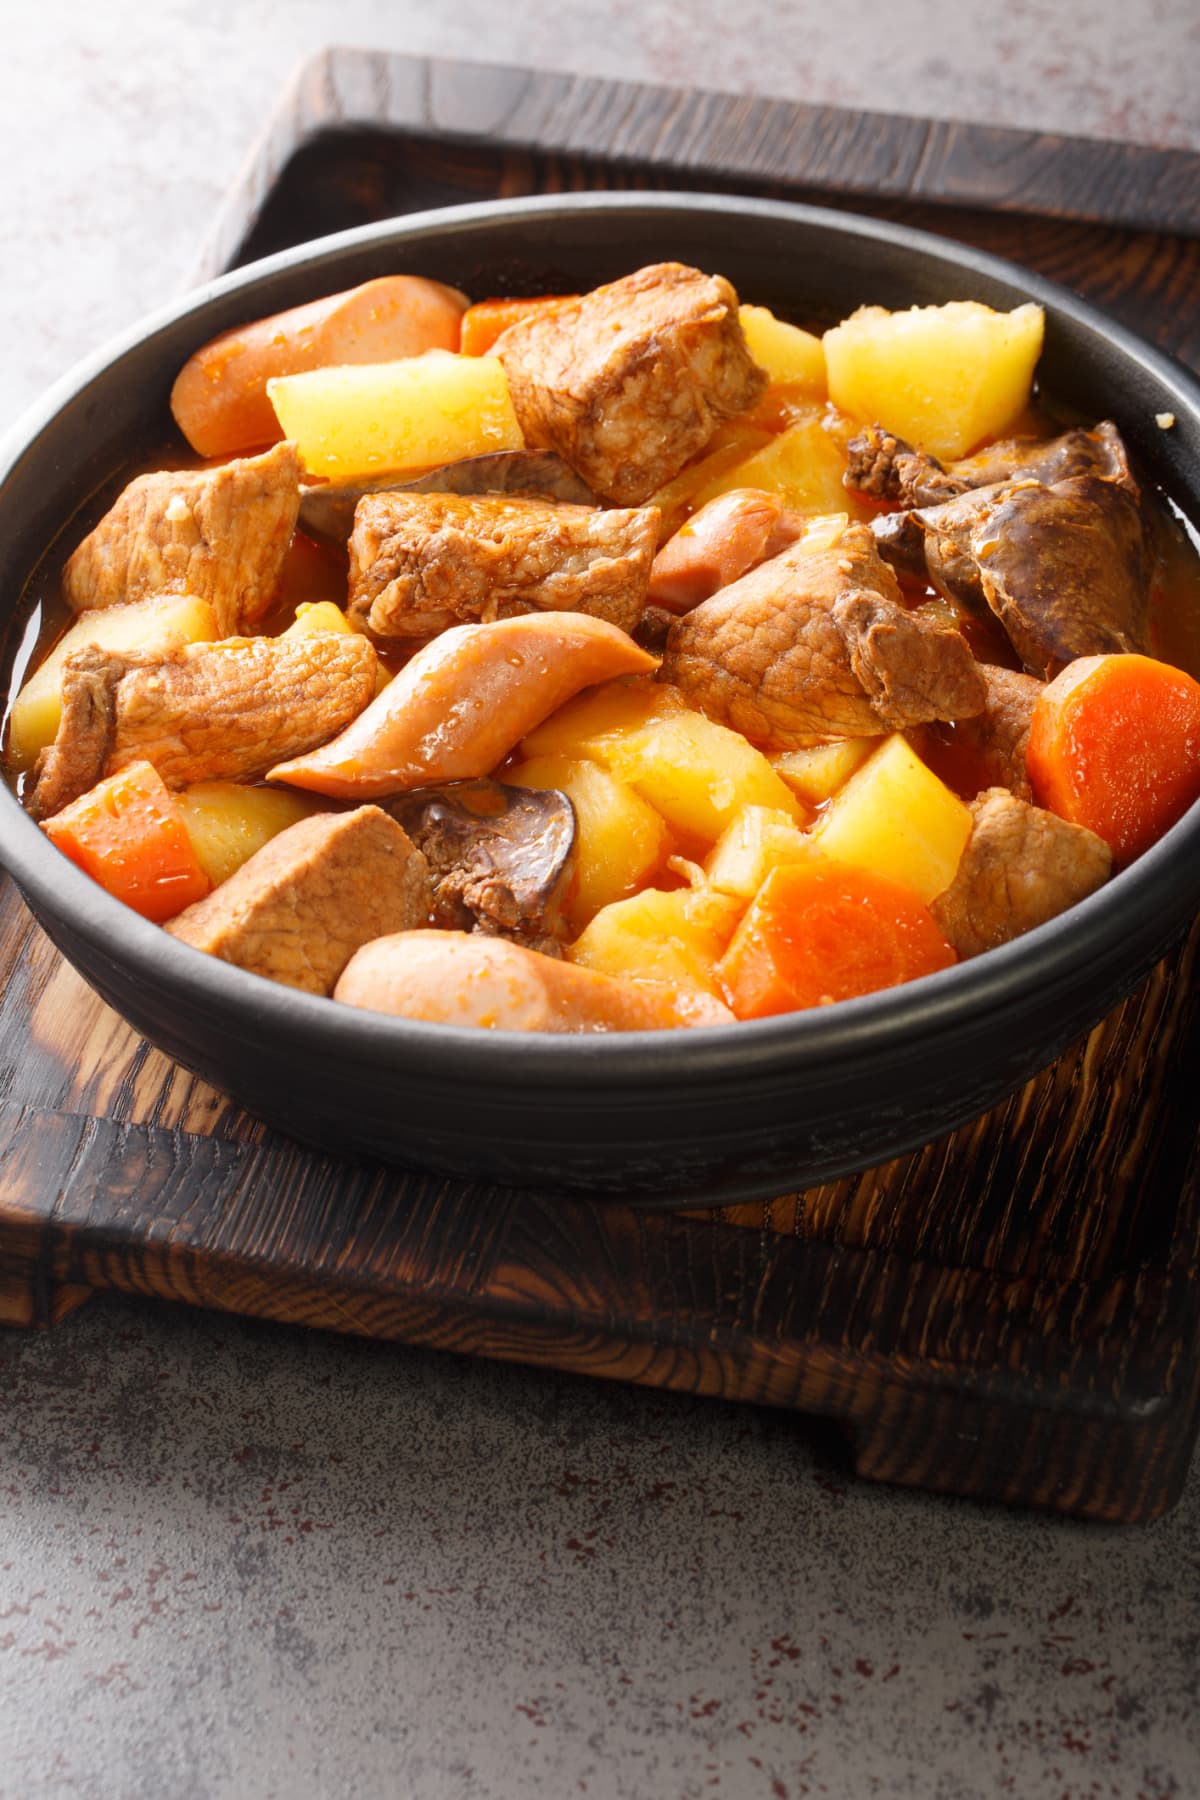 Pork stew in bowl